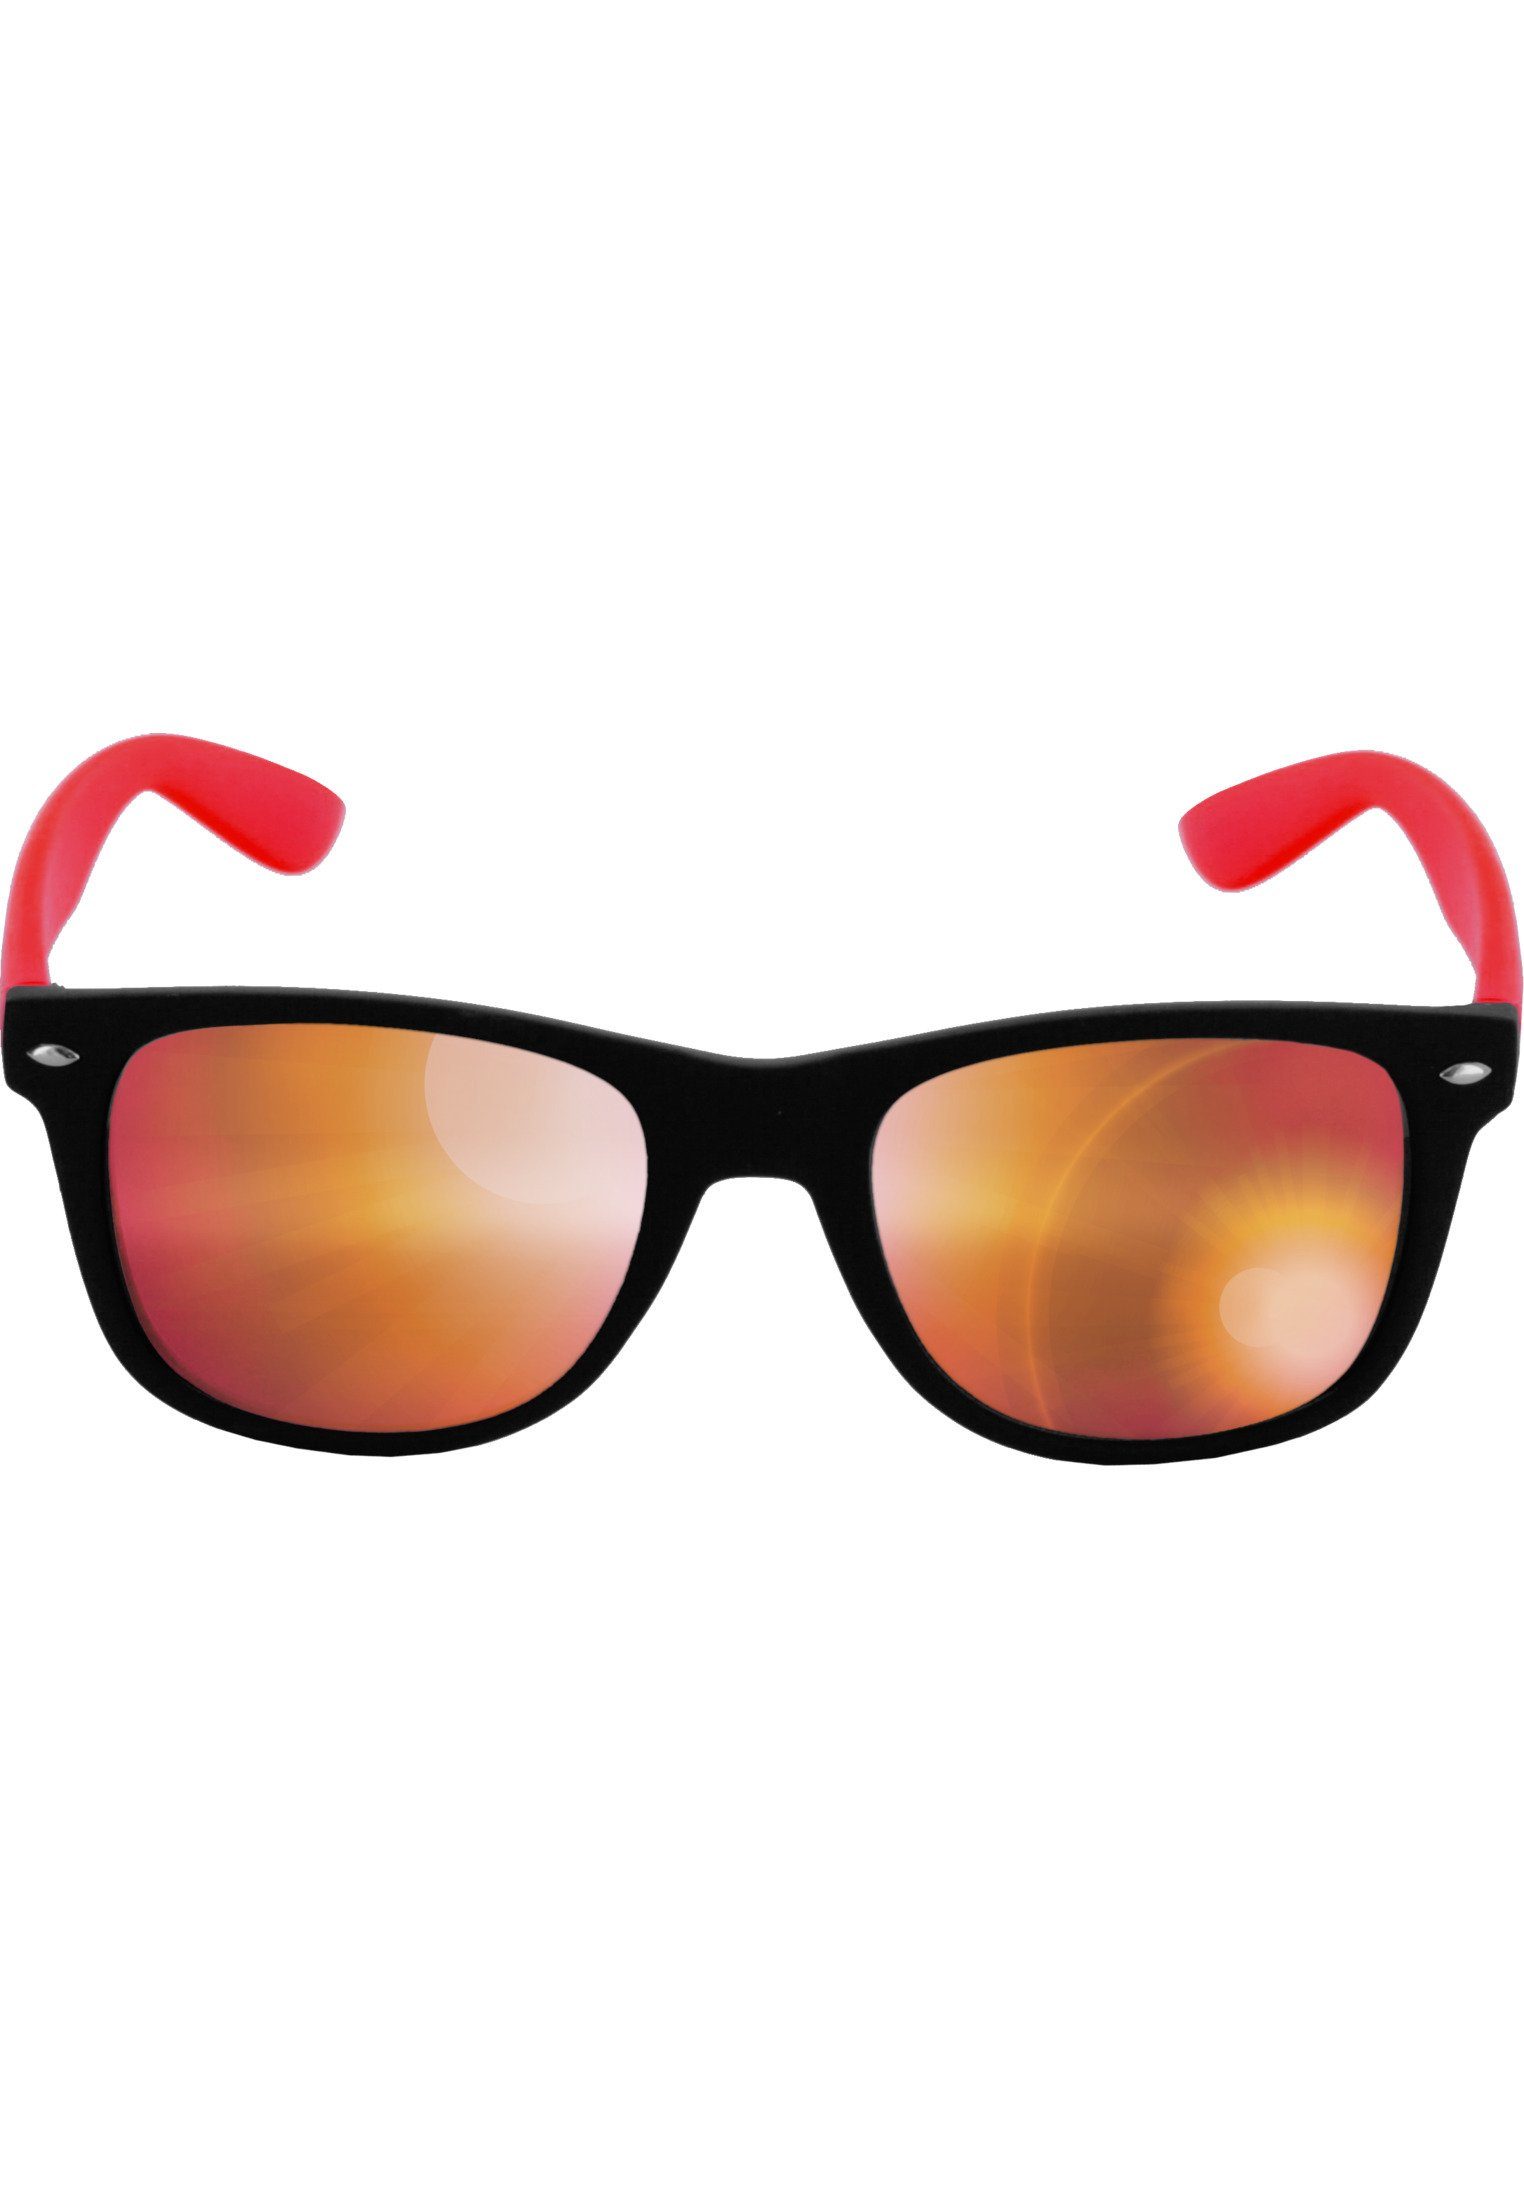 MSTRDS Sonnenbrille Accessoires Sunglasses Likoma Mirror blk/red/red | Sonnenbrillen